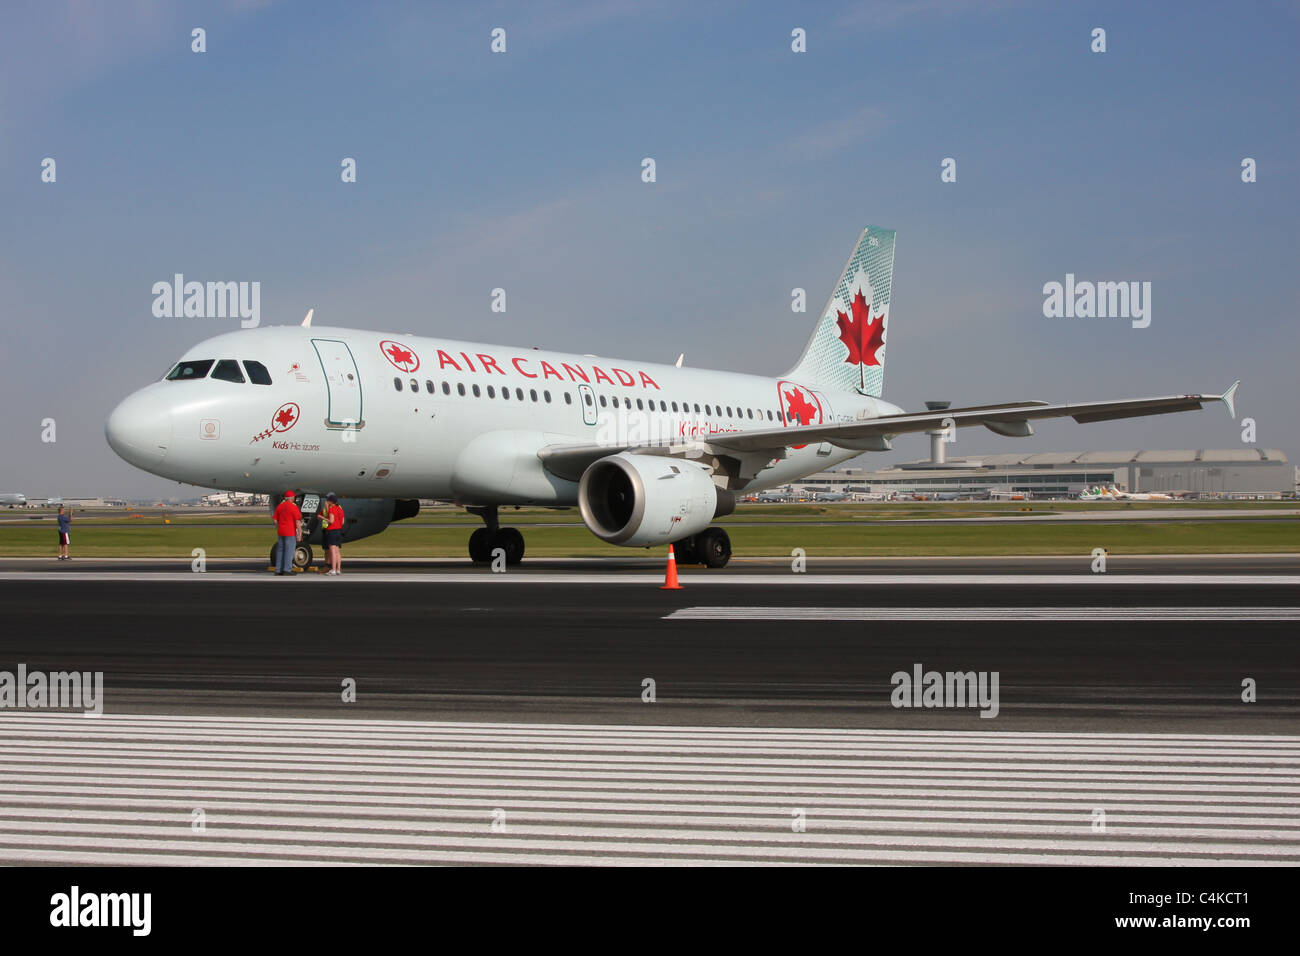 Airbus a330 'Air Canada' Airplane Aircraft Runway Stock Photo